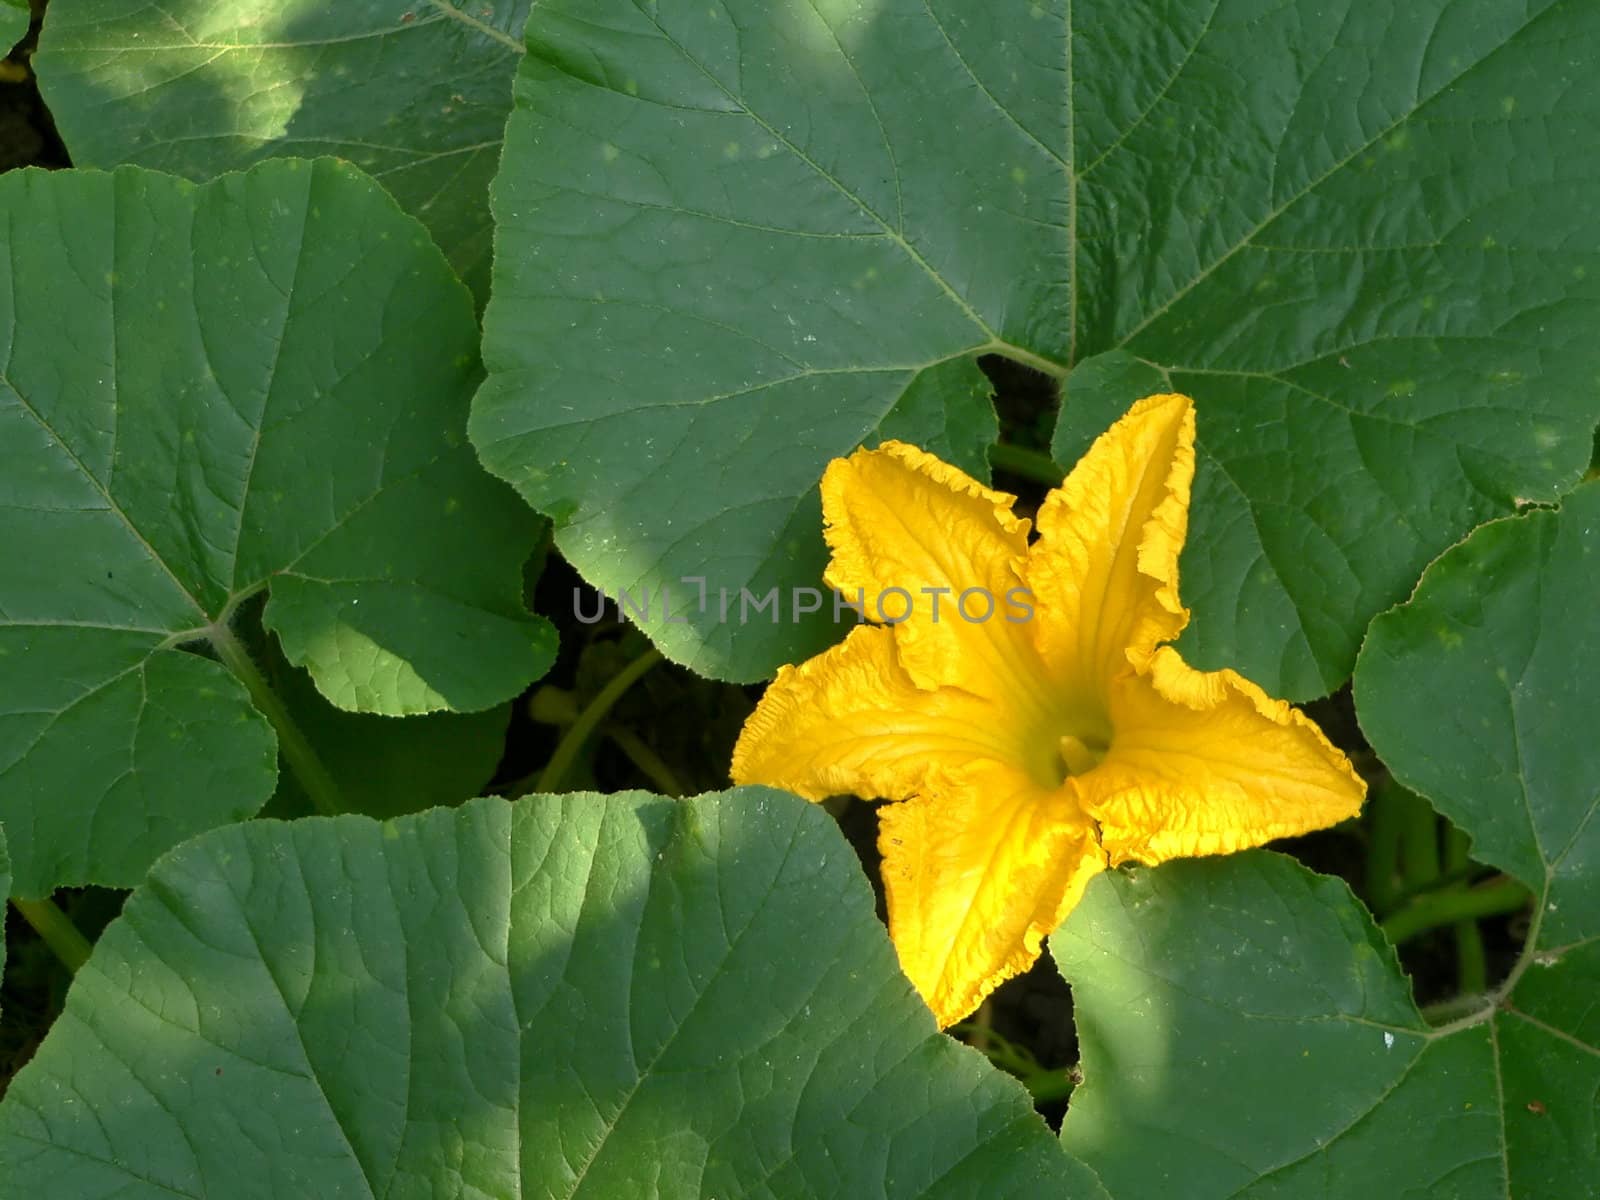 Yellow flower by ichip